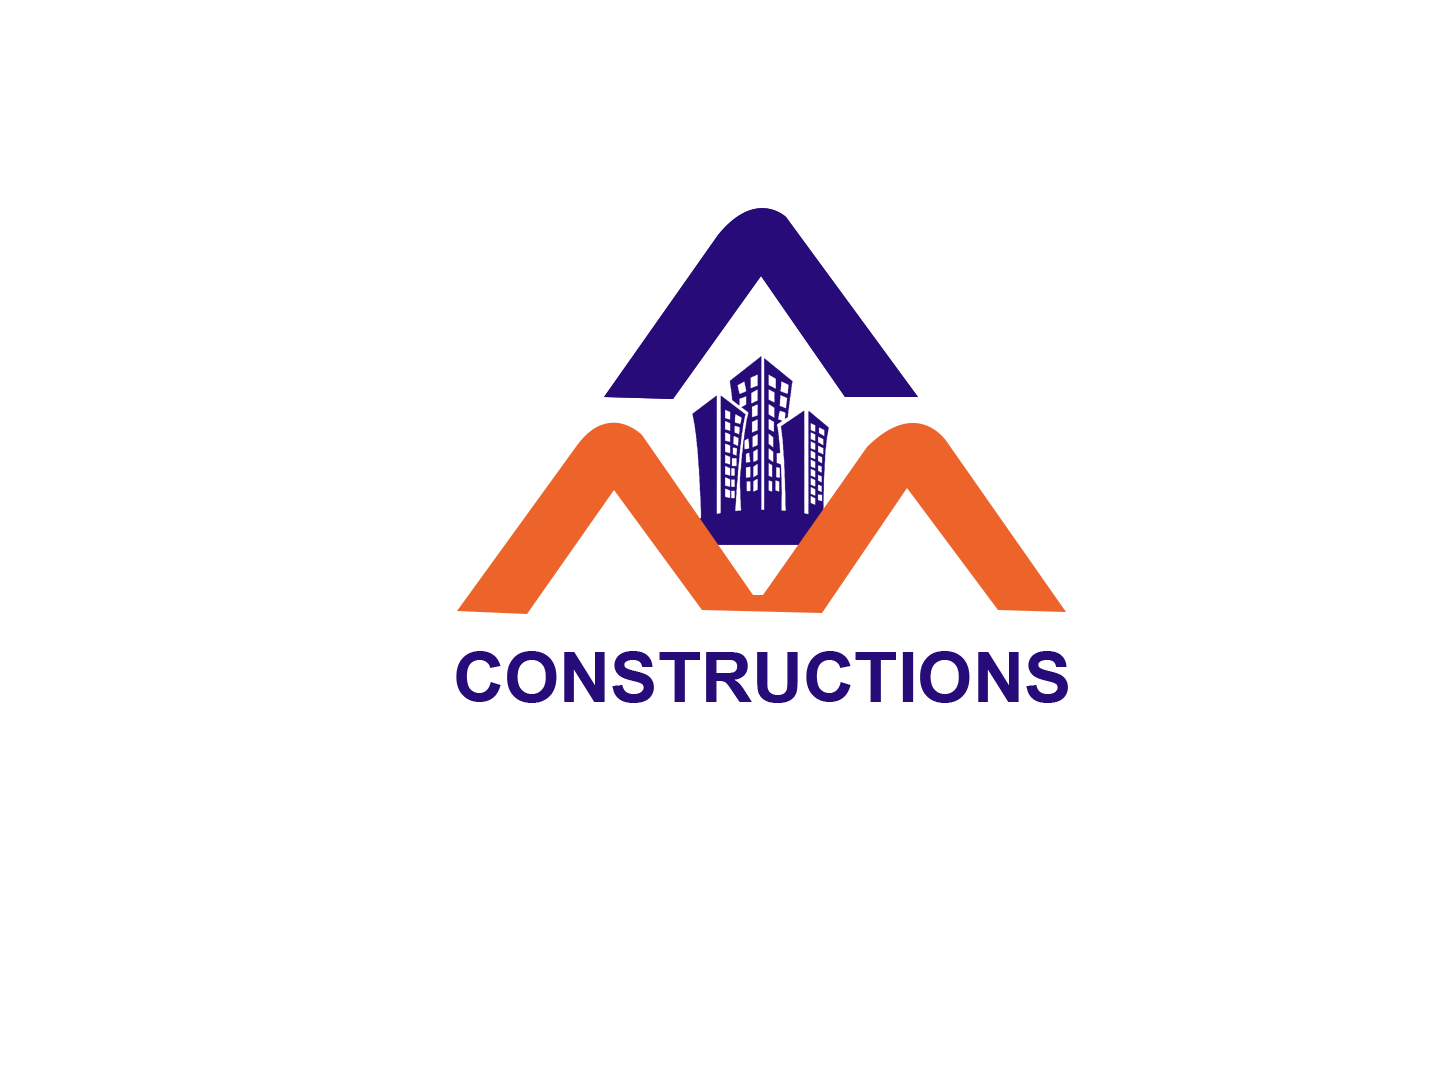 AM Constructions